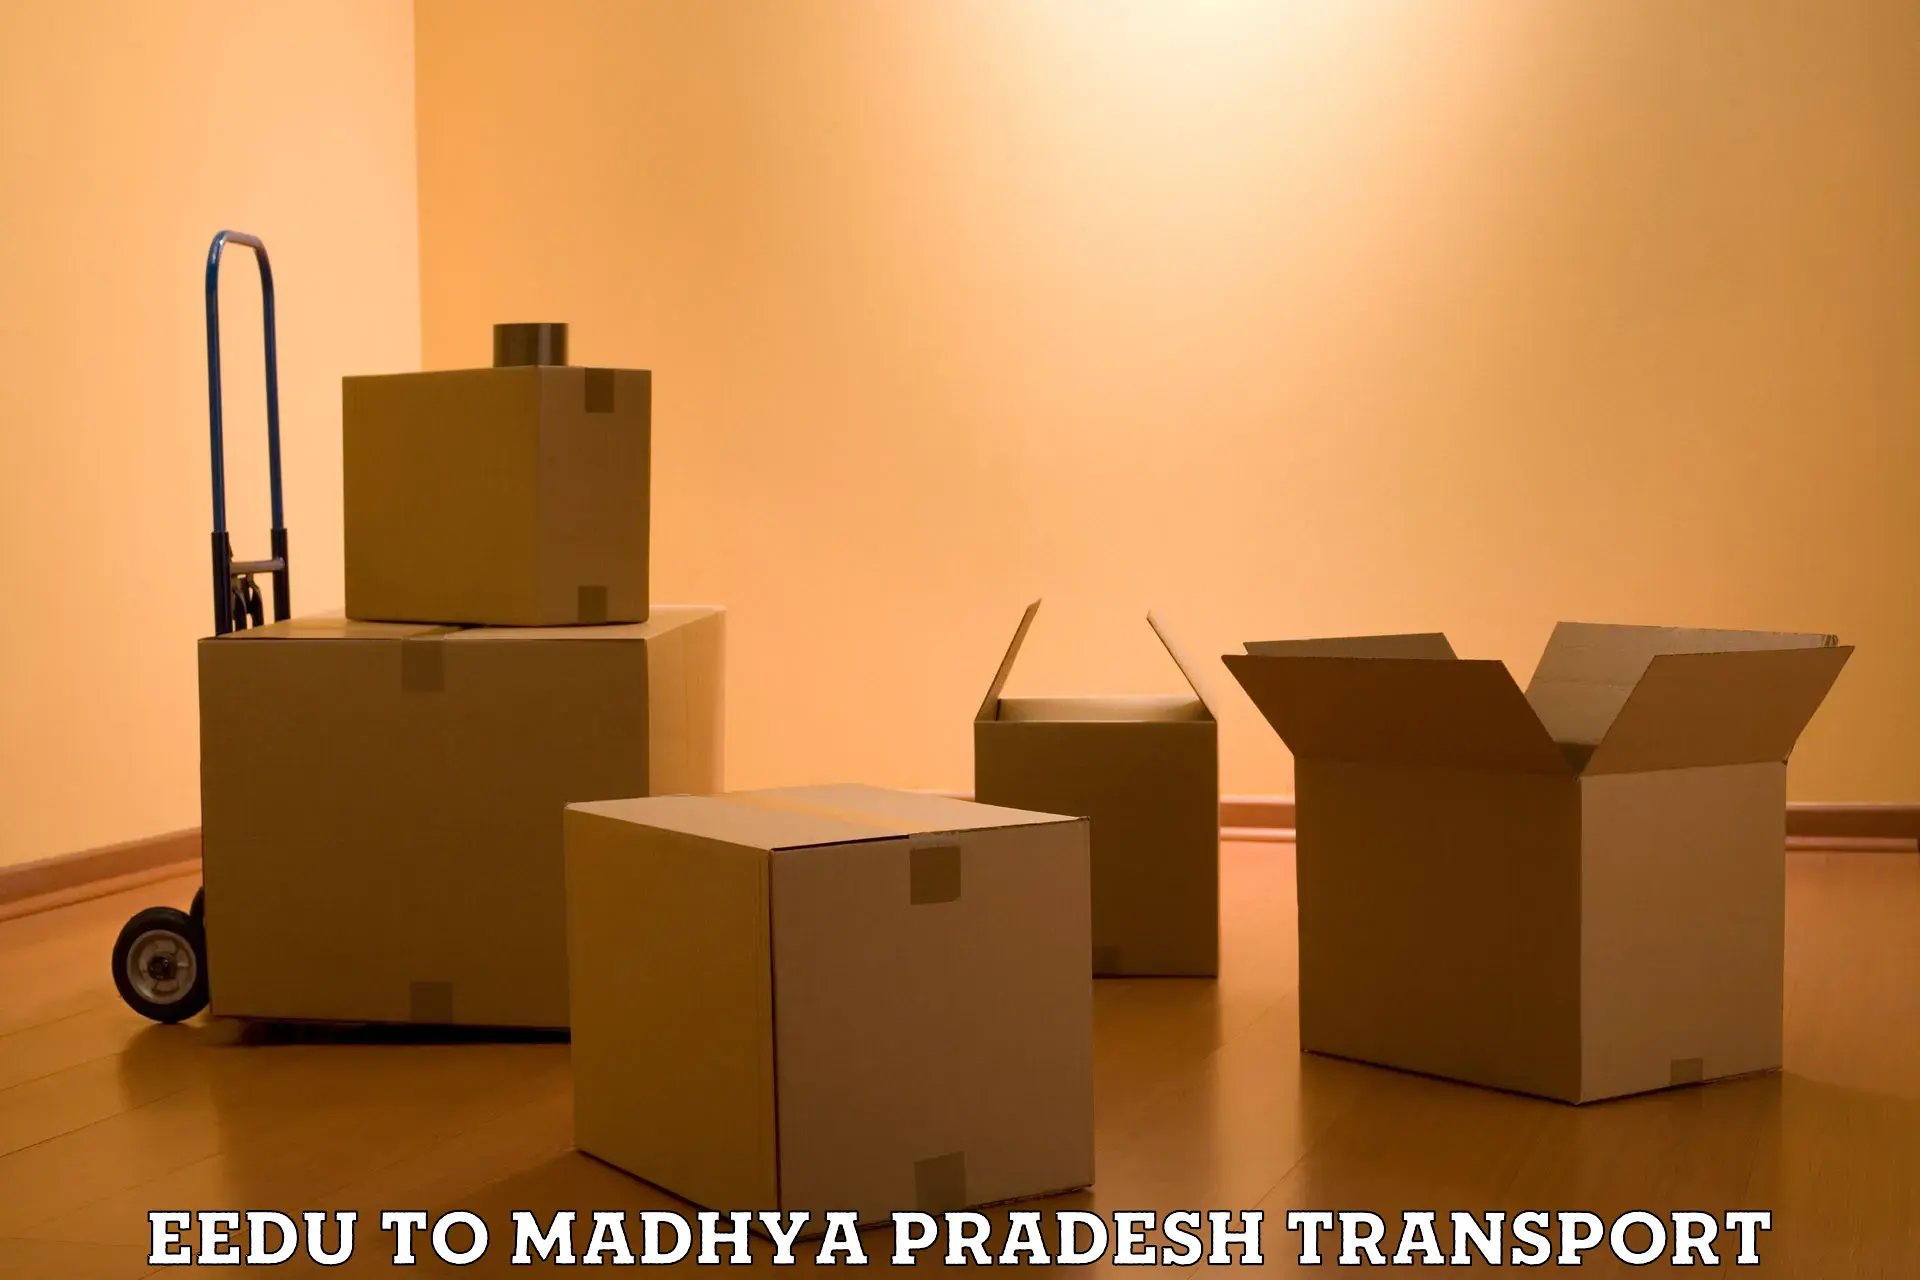 Lorry transport service Eedu to Madhya Pradesh